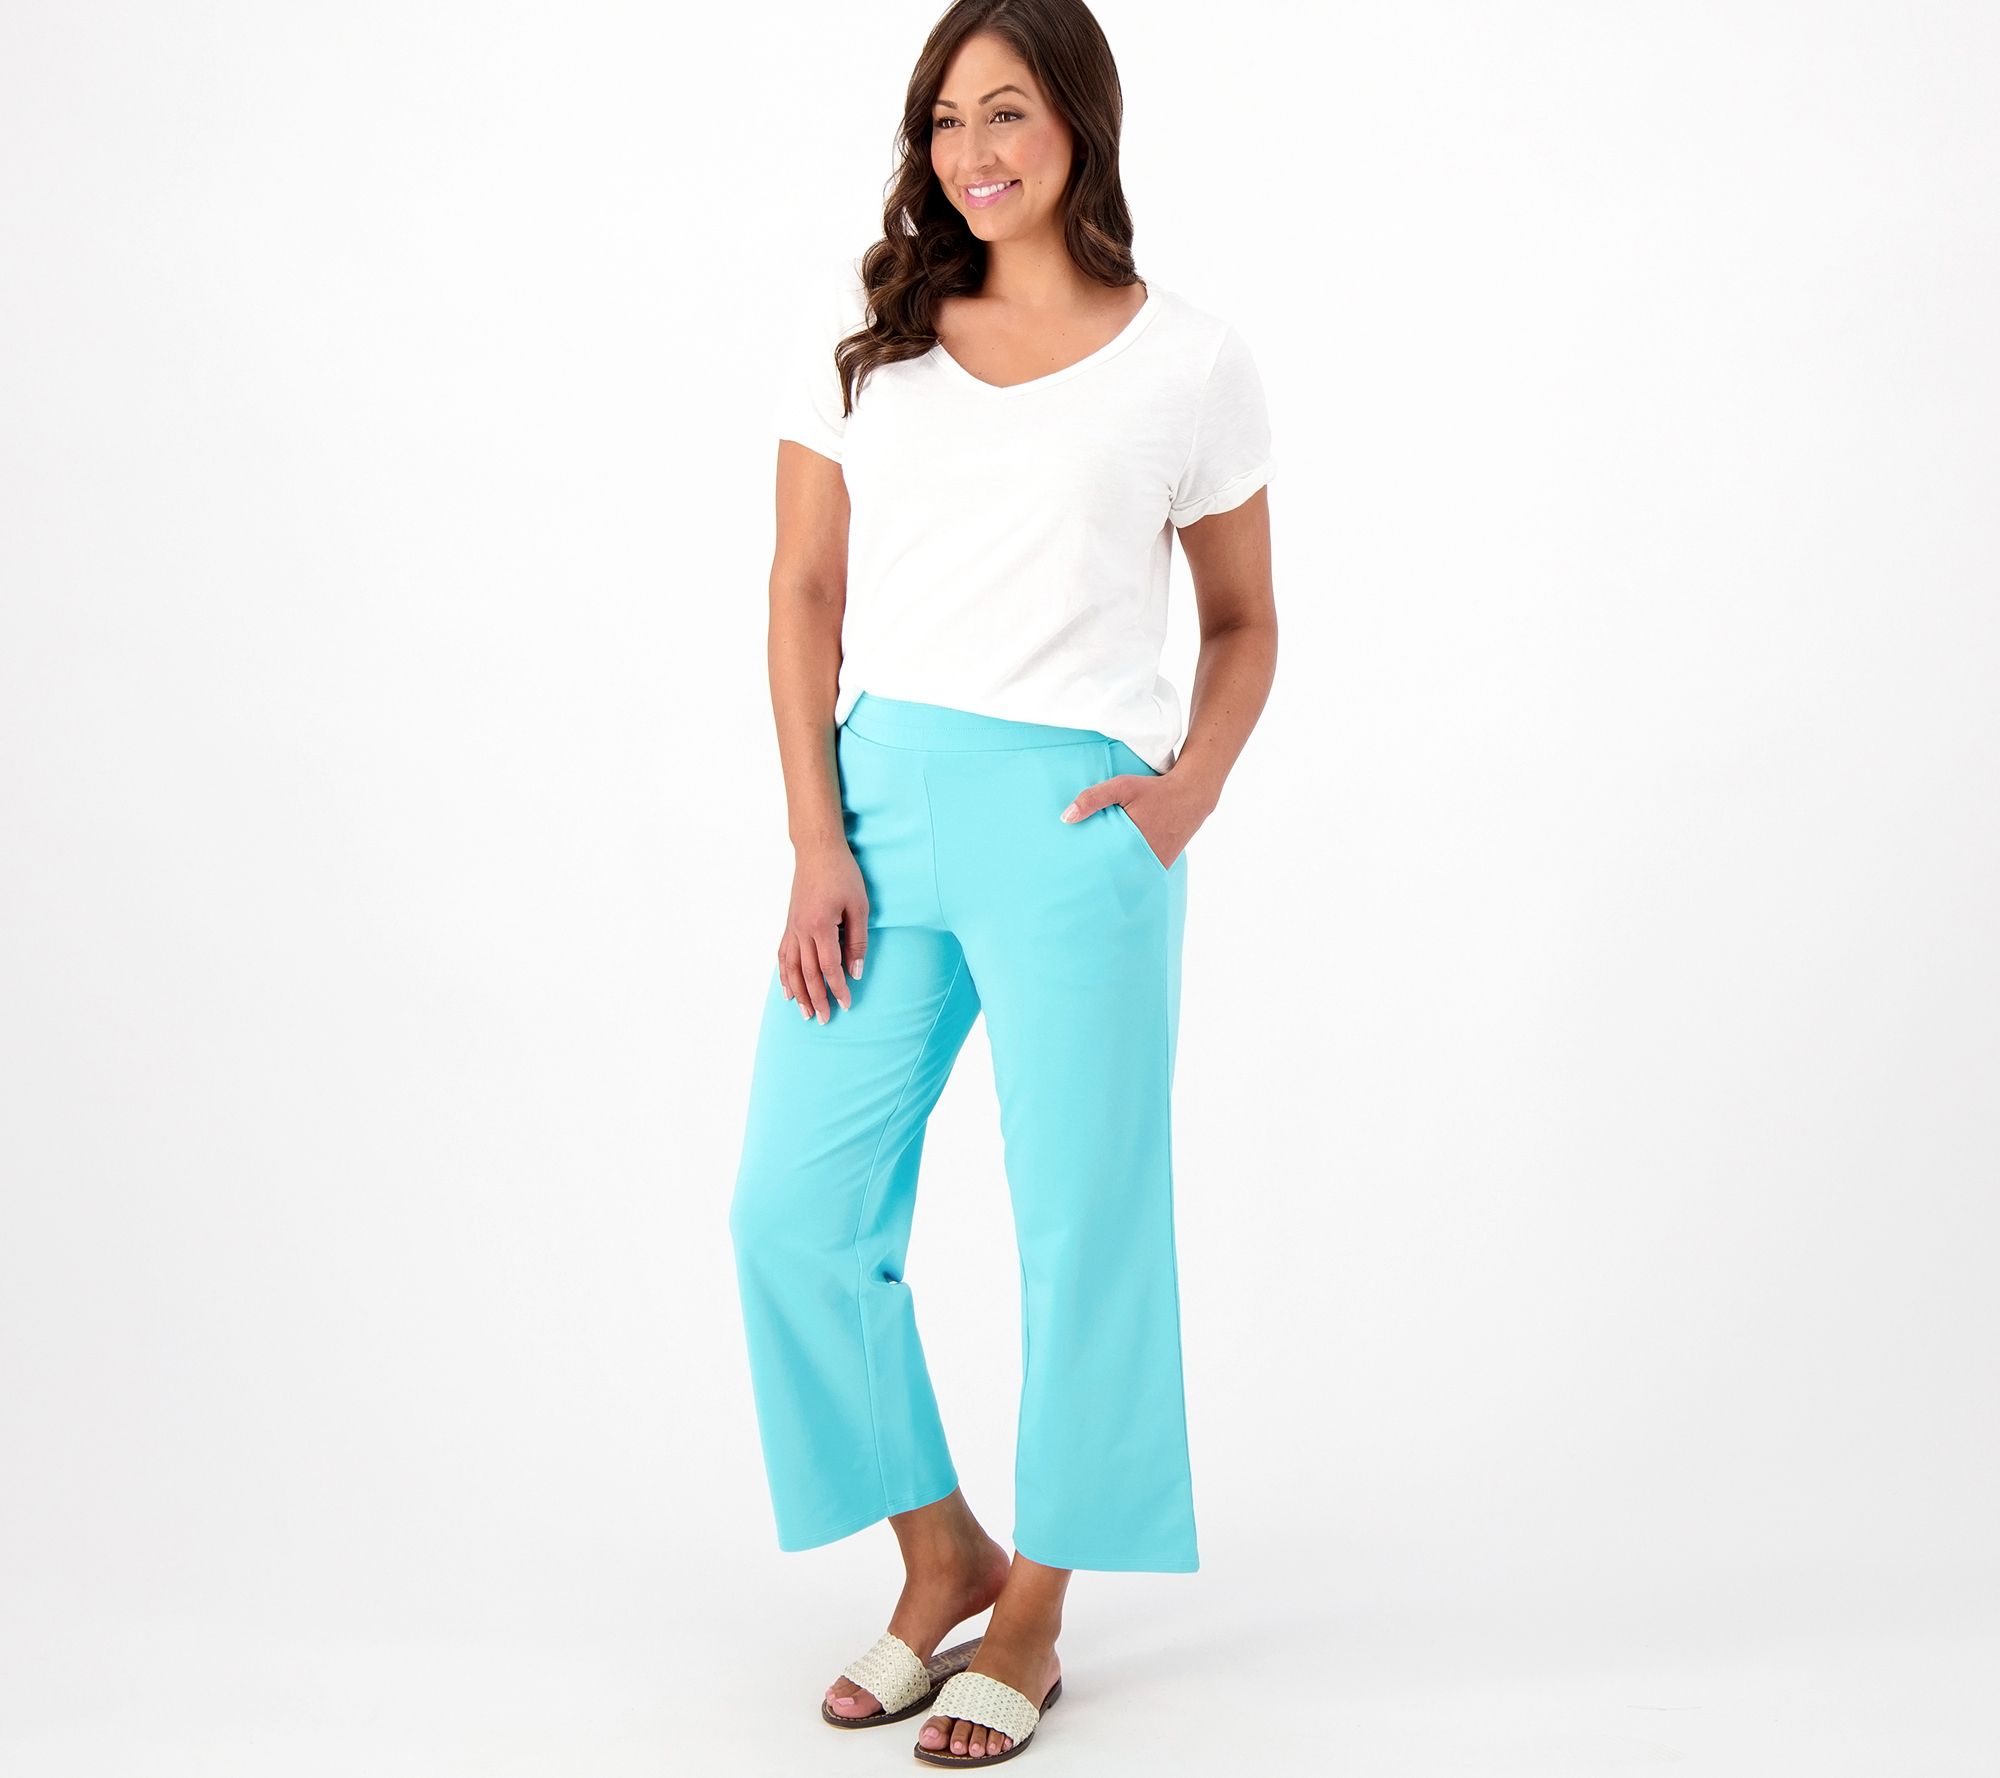 RealSize Women's French Terry Cloth Capri Pants with Pockets, XS-XXXL